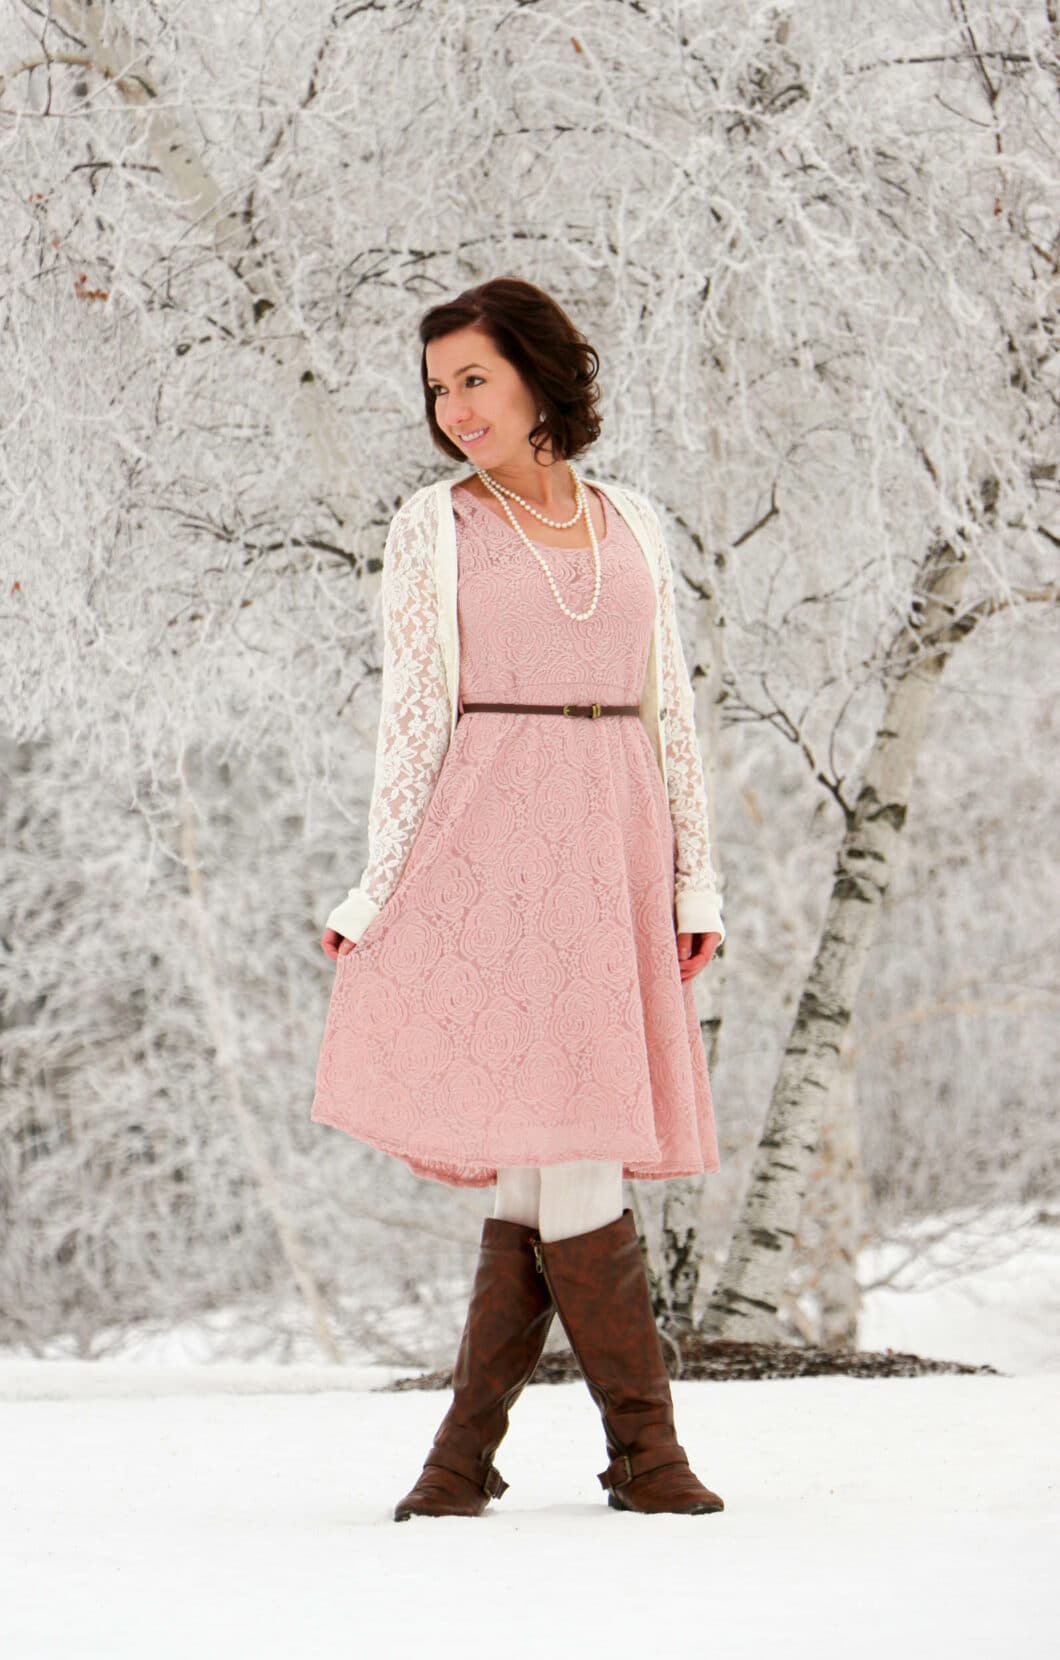 Styling a PinkBlush Dress for a Winter Wonderland